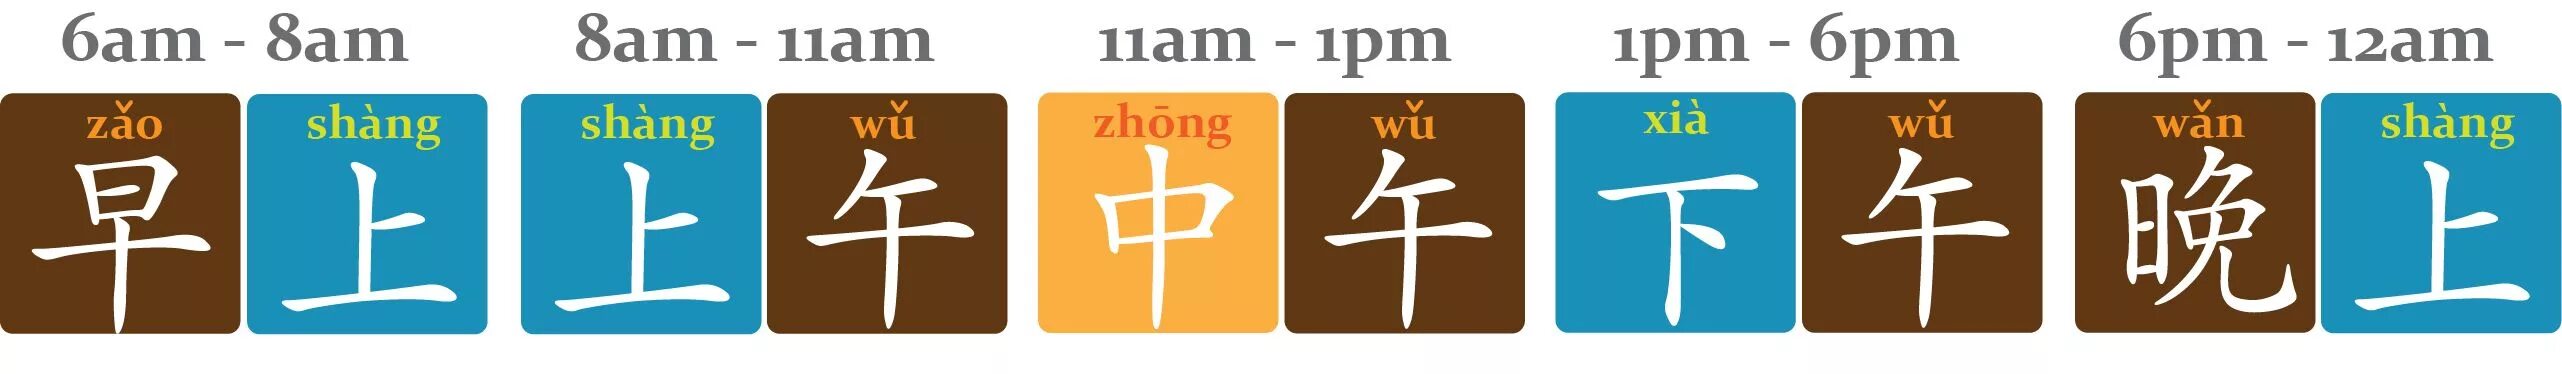 Иероглиф цвет. Время суток на китайском. 午 иероглиф. Время в китайском языке. Части суток в китайском языке.